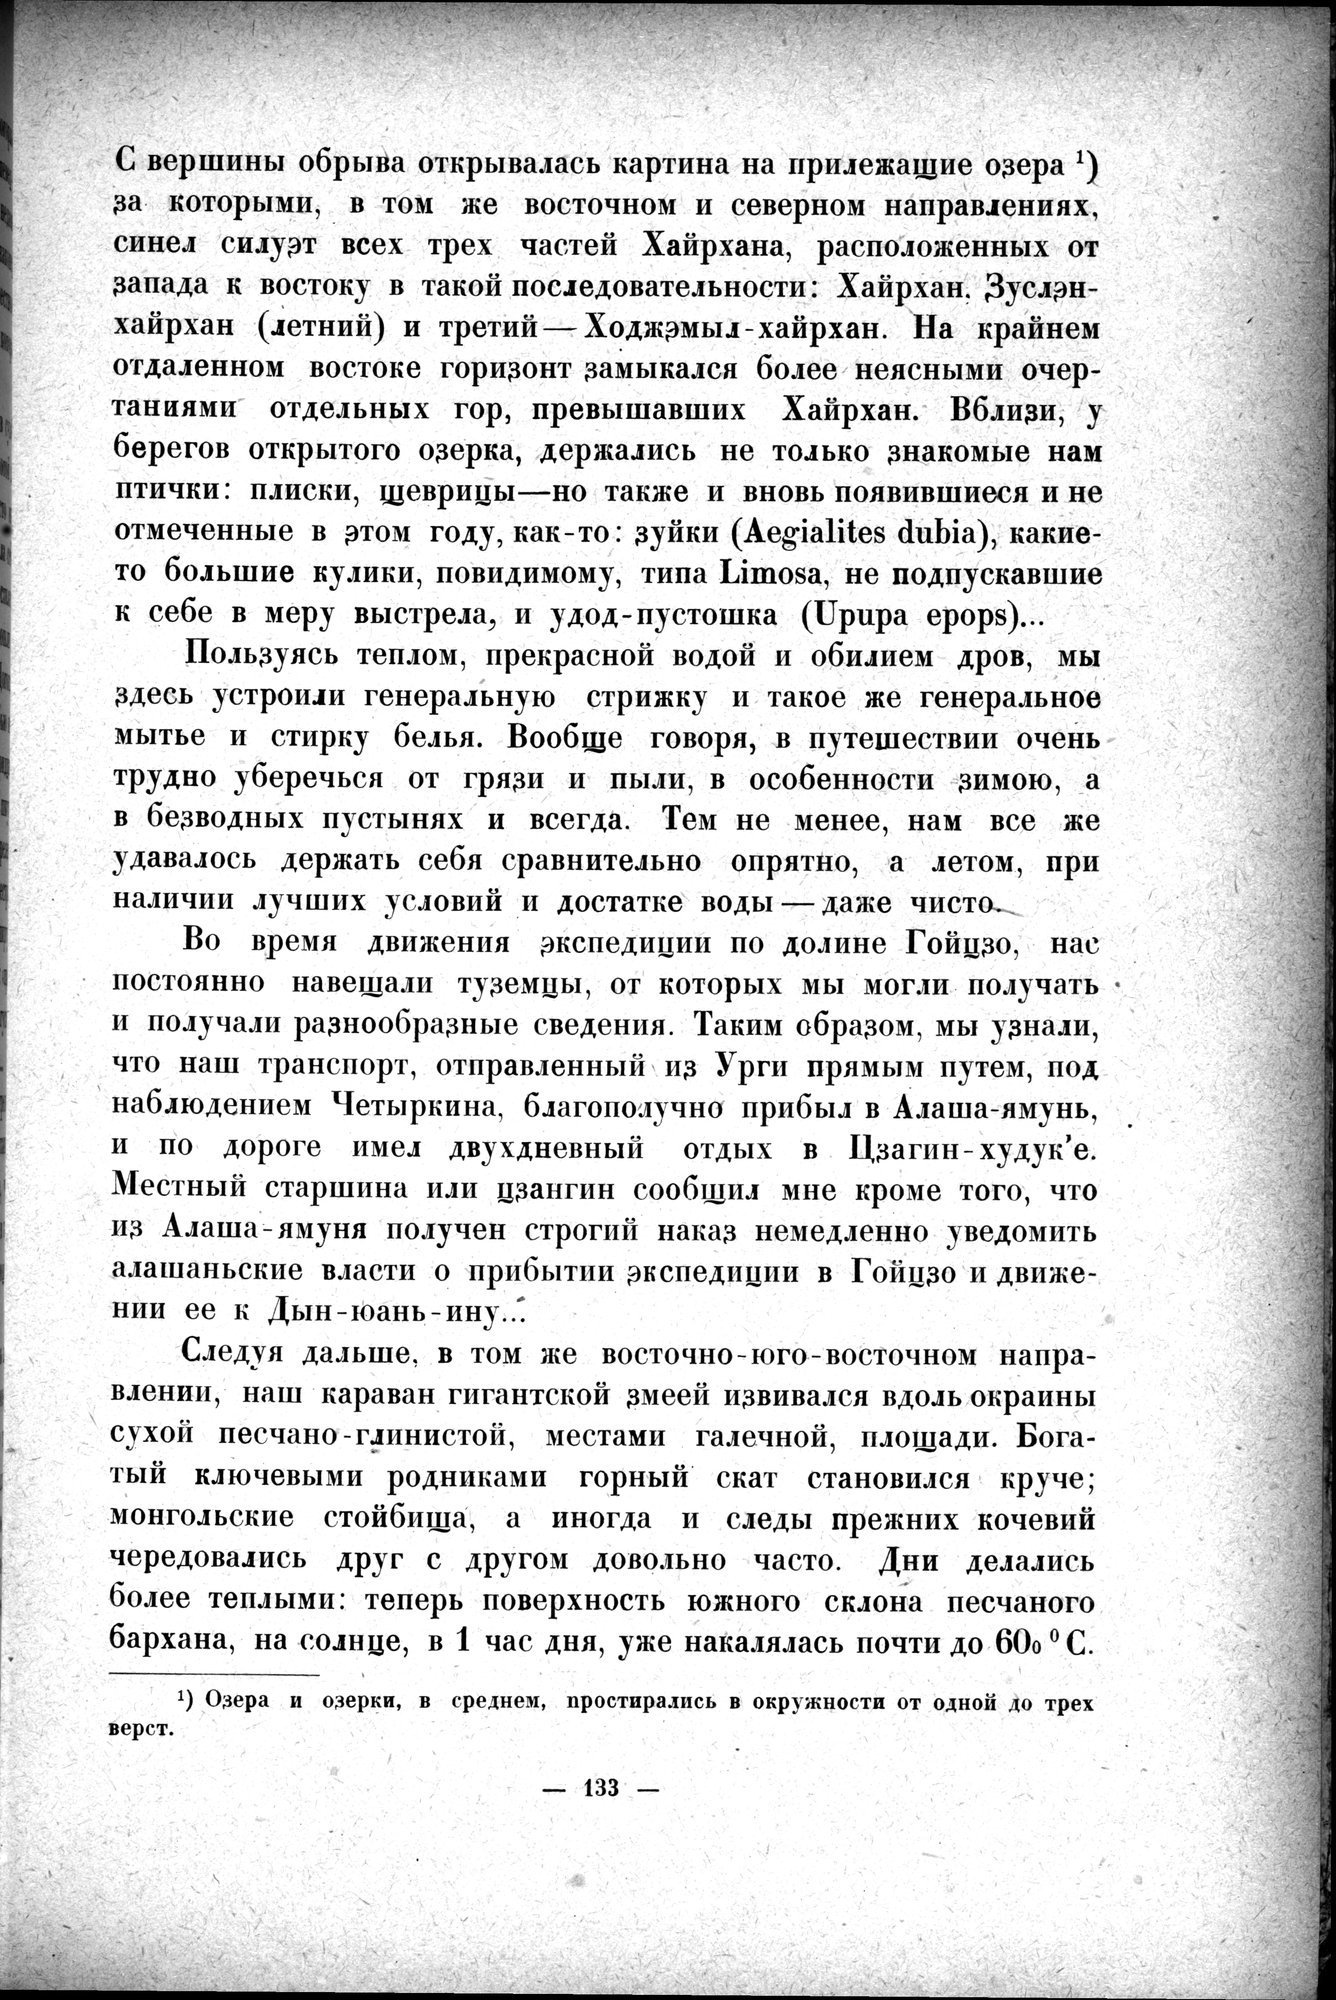 Mongoliya i Amdo i mertby gorod Khara-Khoto : vol.1 / Page 161 (Grayscale High Resolution Image)